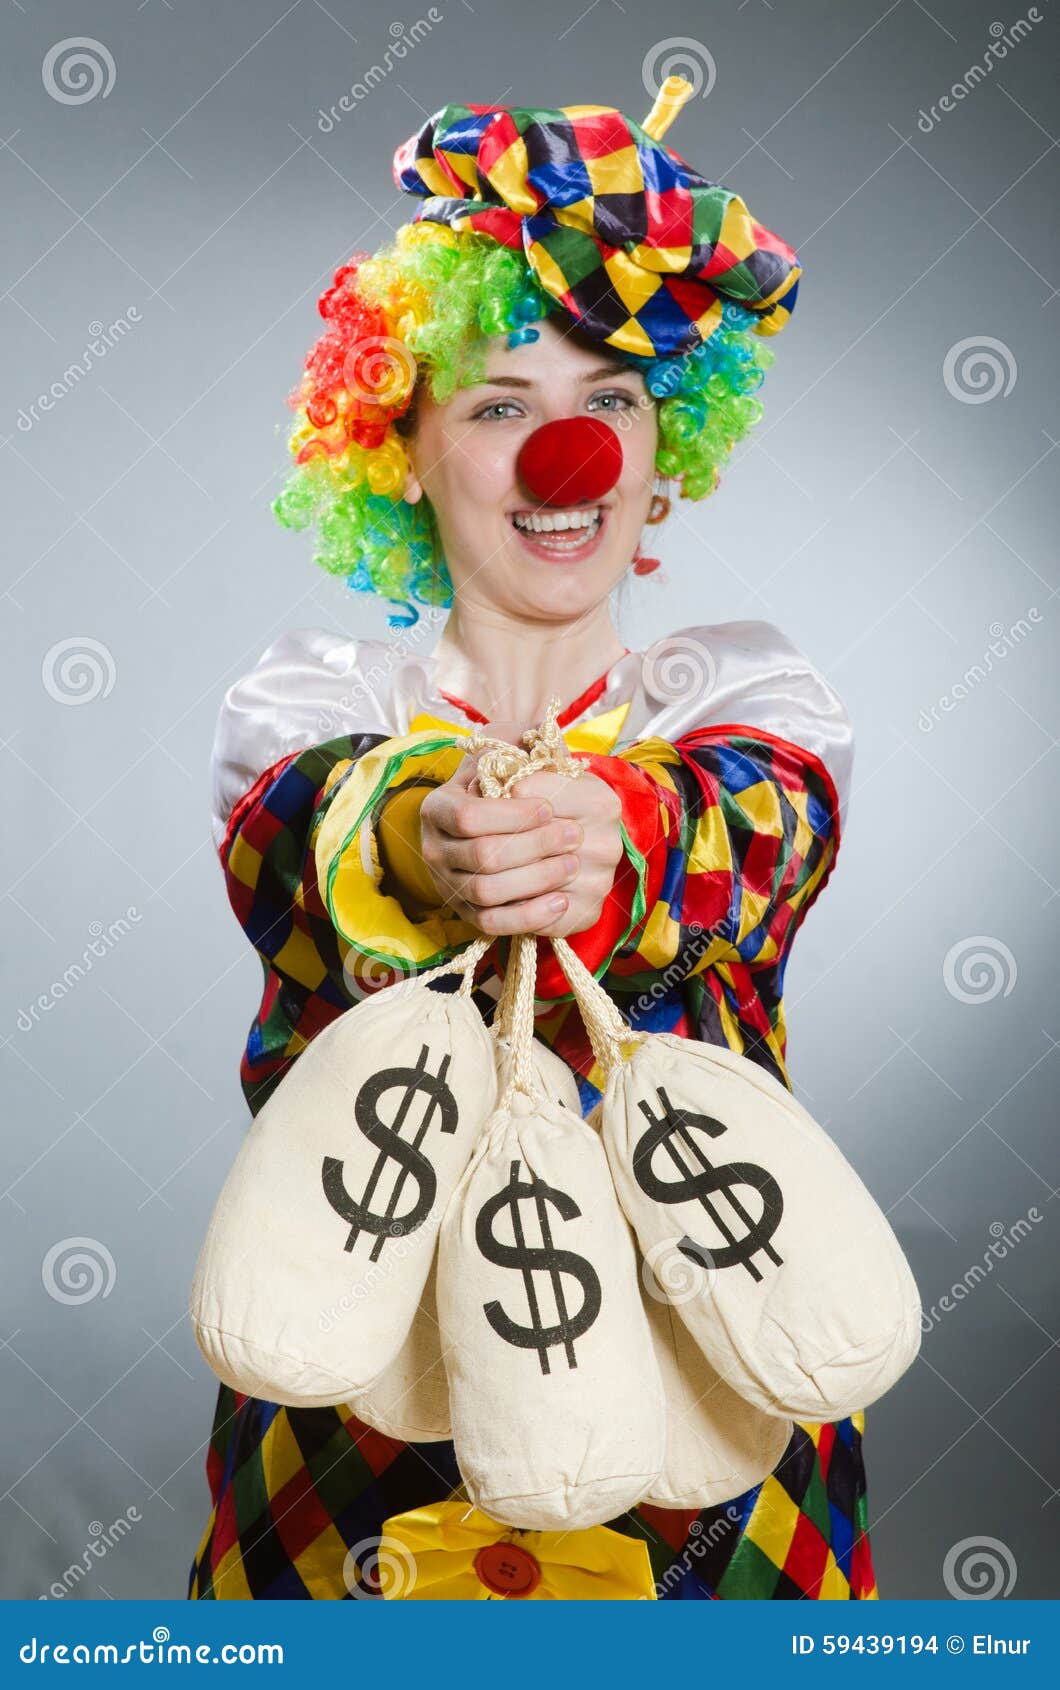 clown-money-bag-funny-concept-59439194.jpg